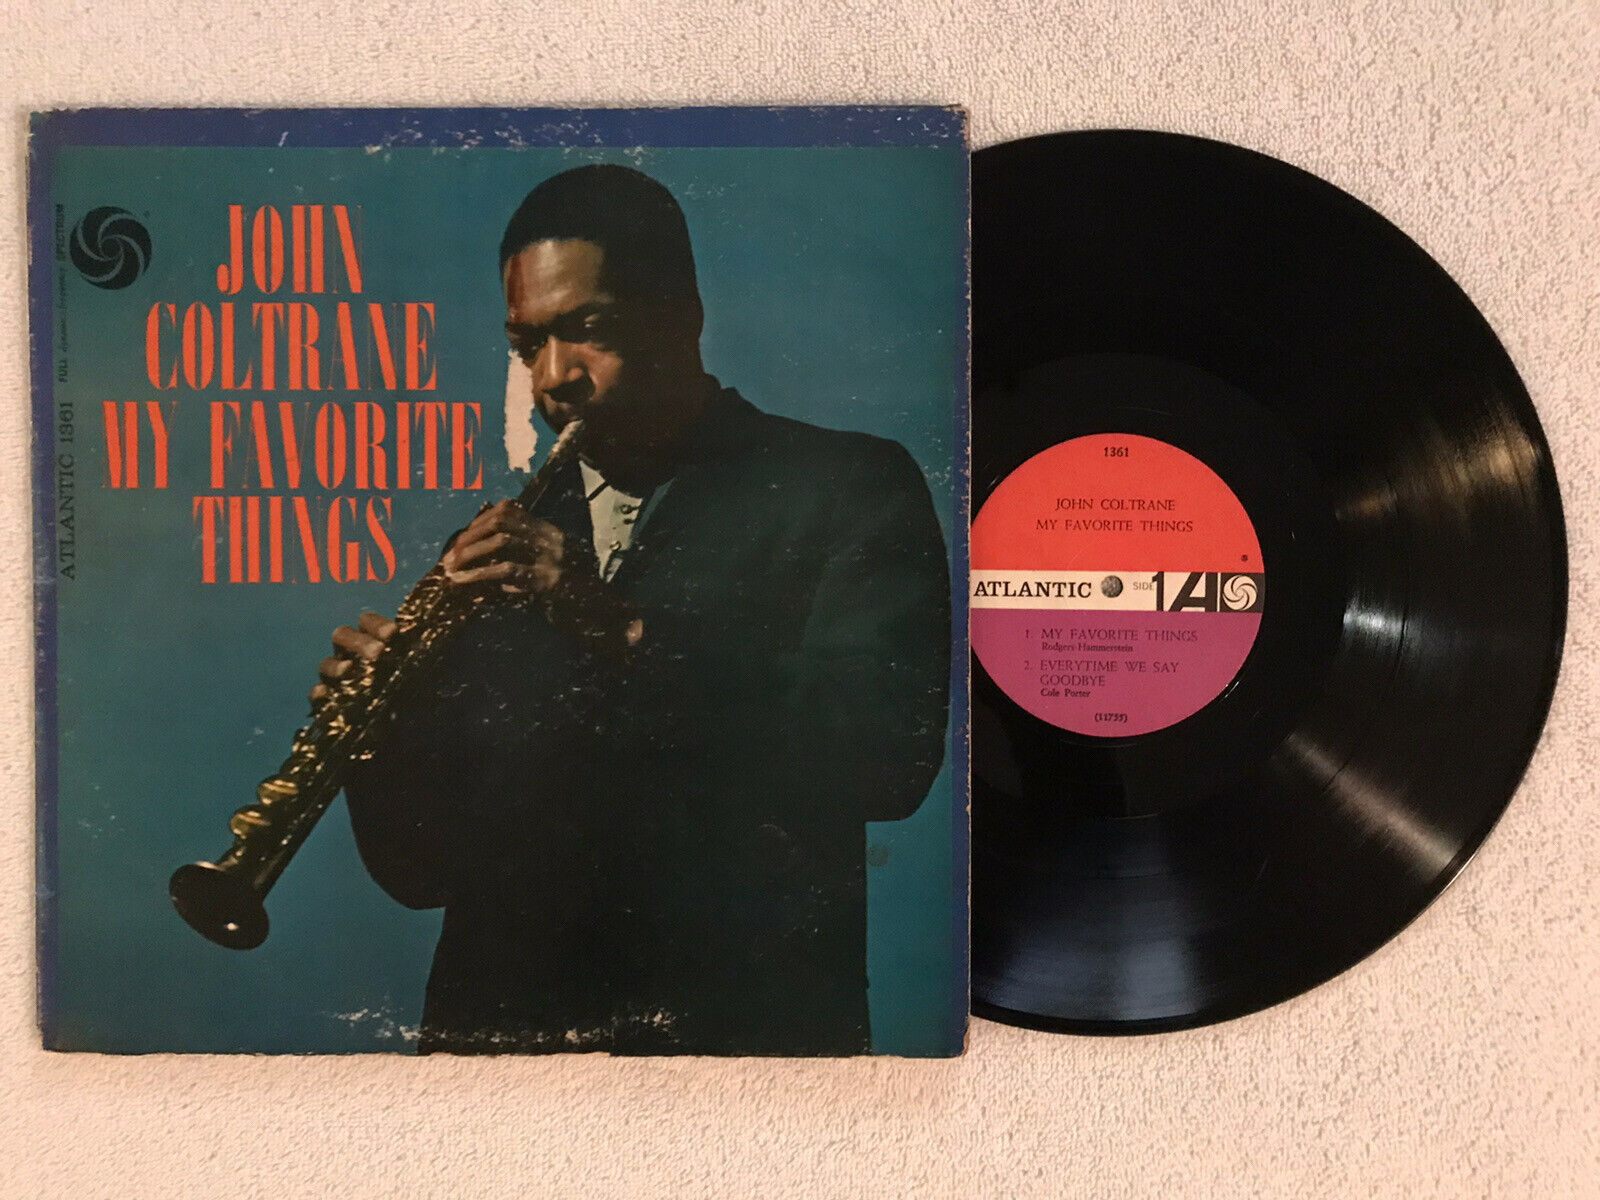 John Coltrane ‎– My Favorite Things - VG Lp Record 1961 Atlantic USA Mono Vinyl - Jazz / Hard Bop / Modal